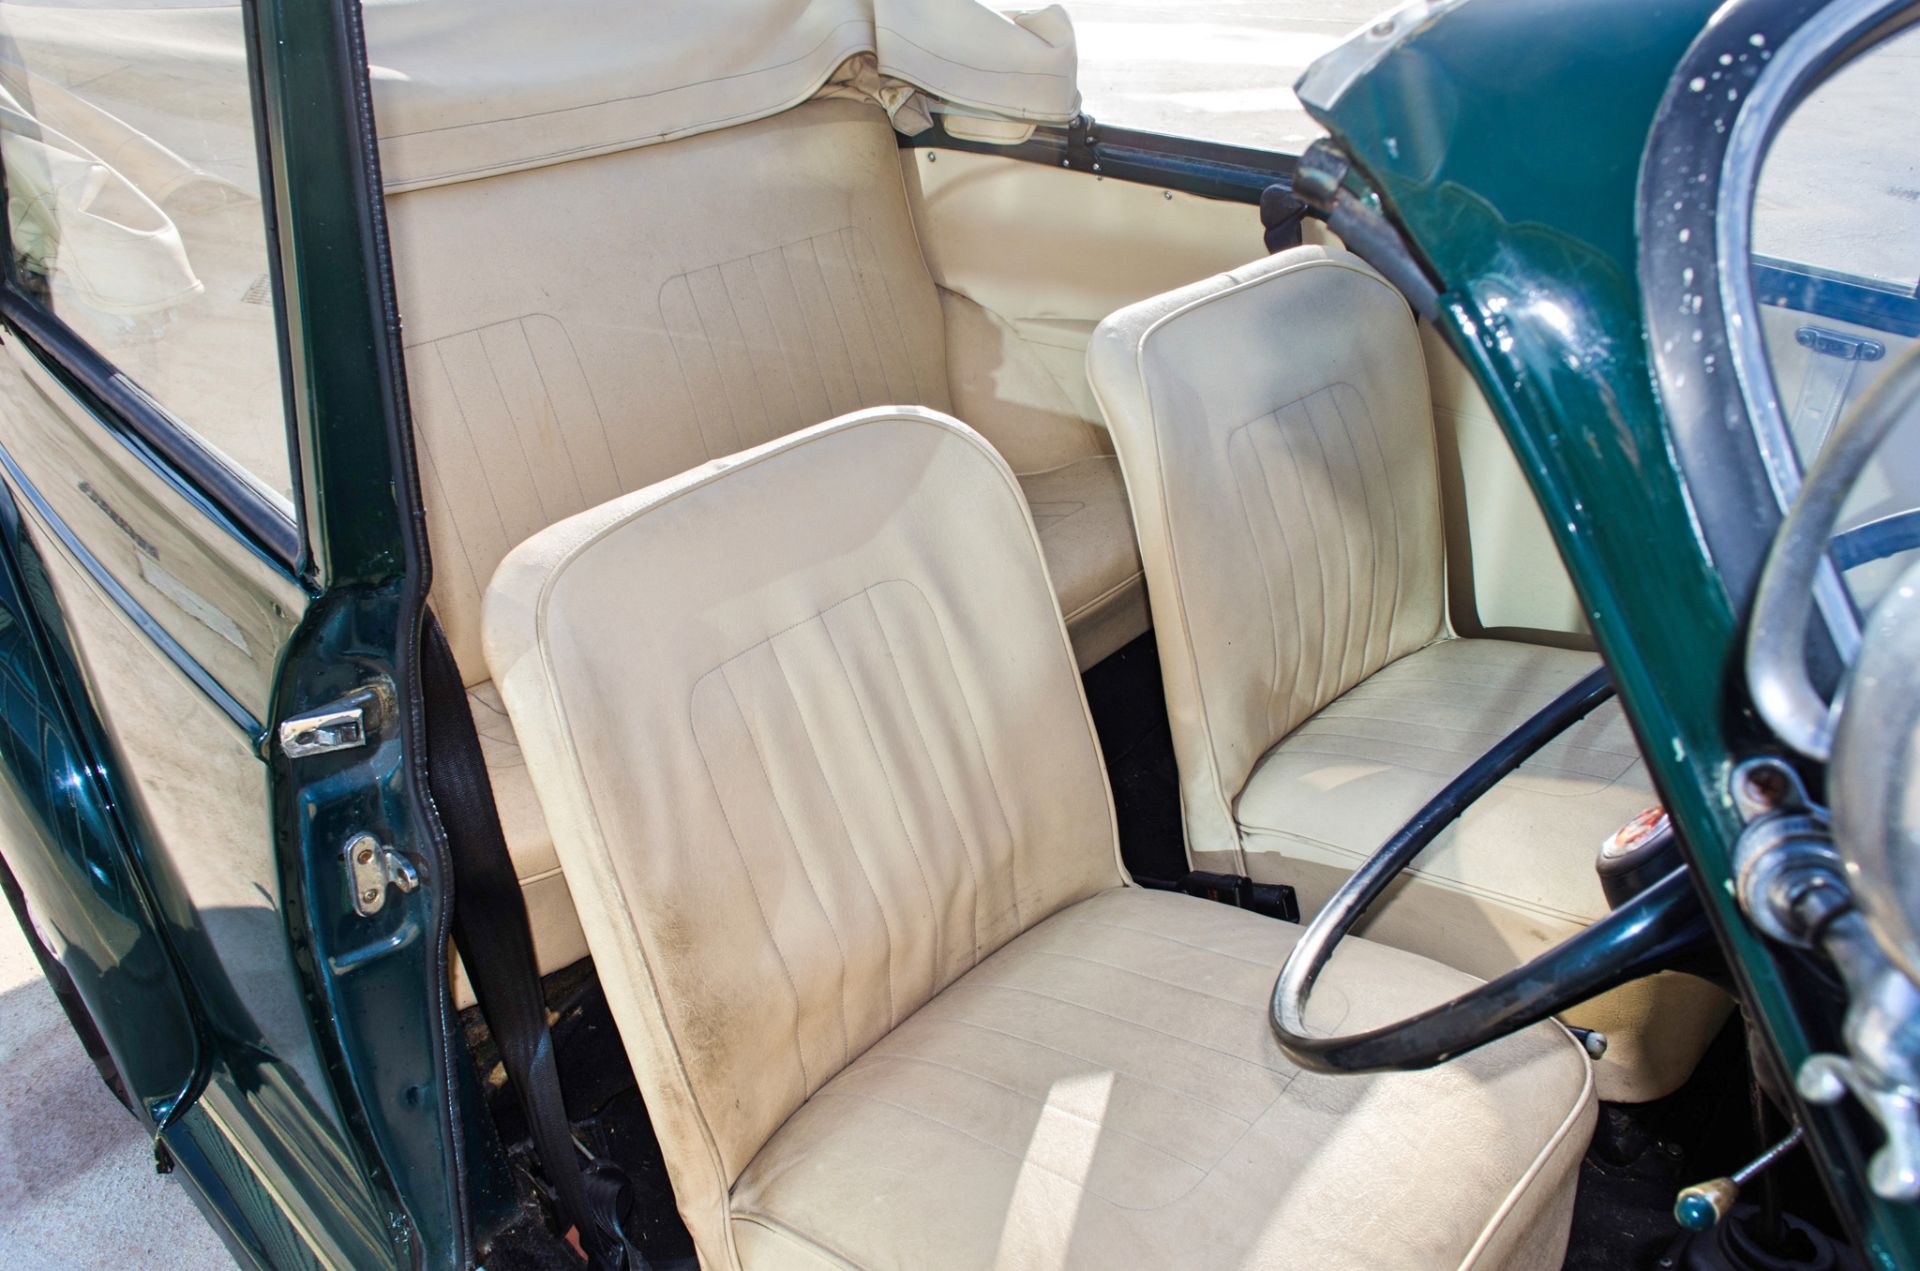 1968 Morris Minor 1000 1098cc series V 2 door convertible - Image 36 of 58